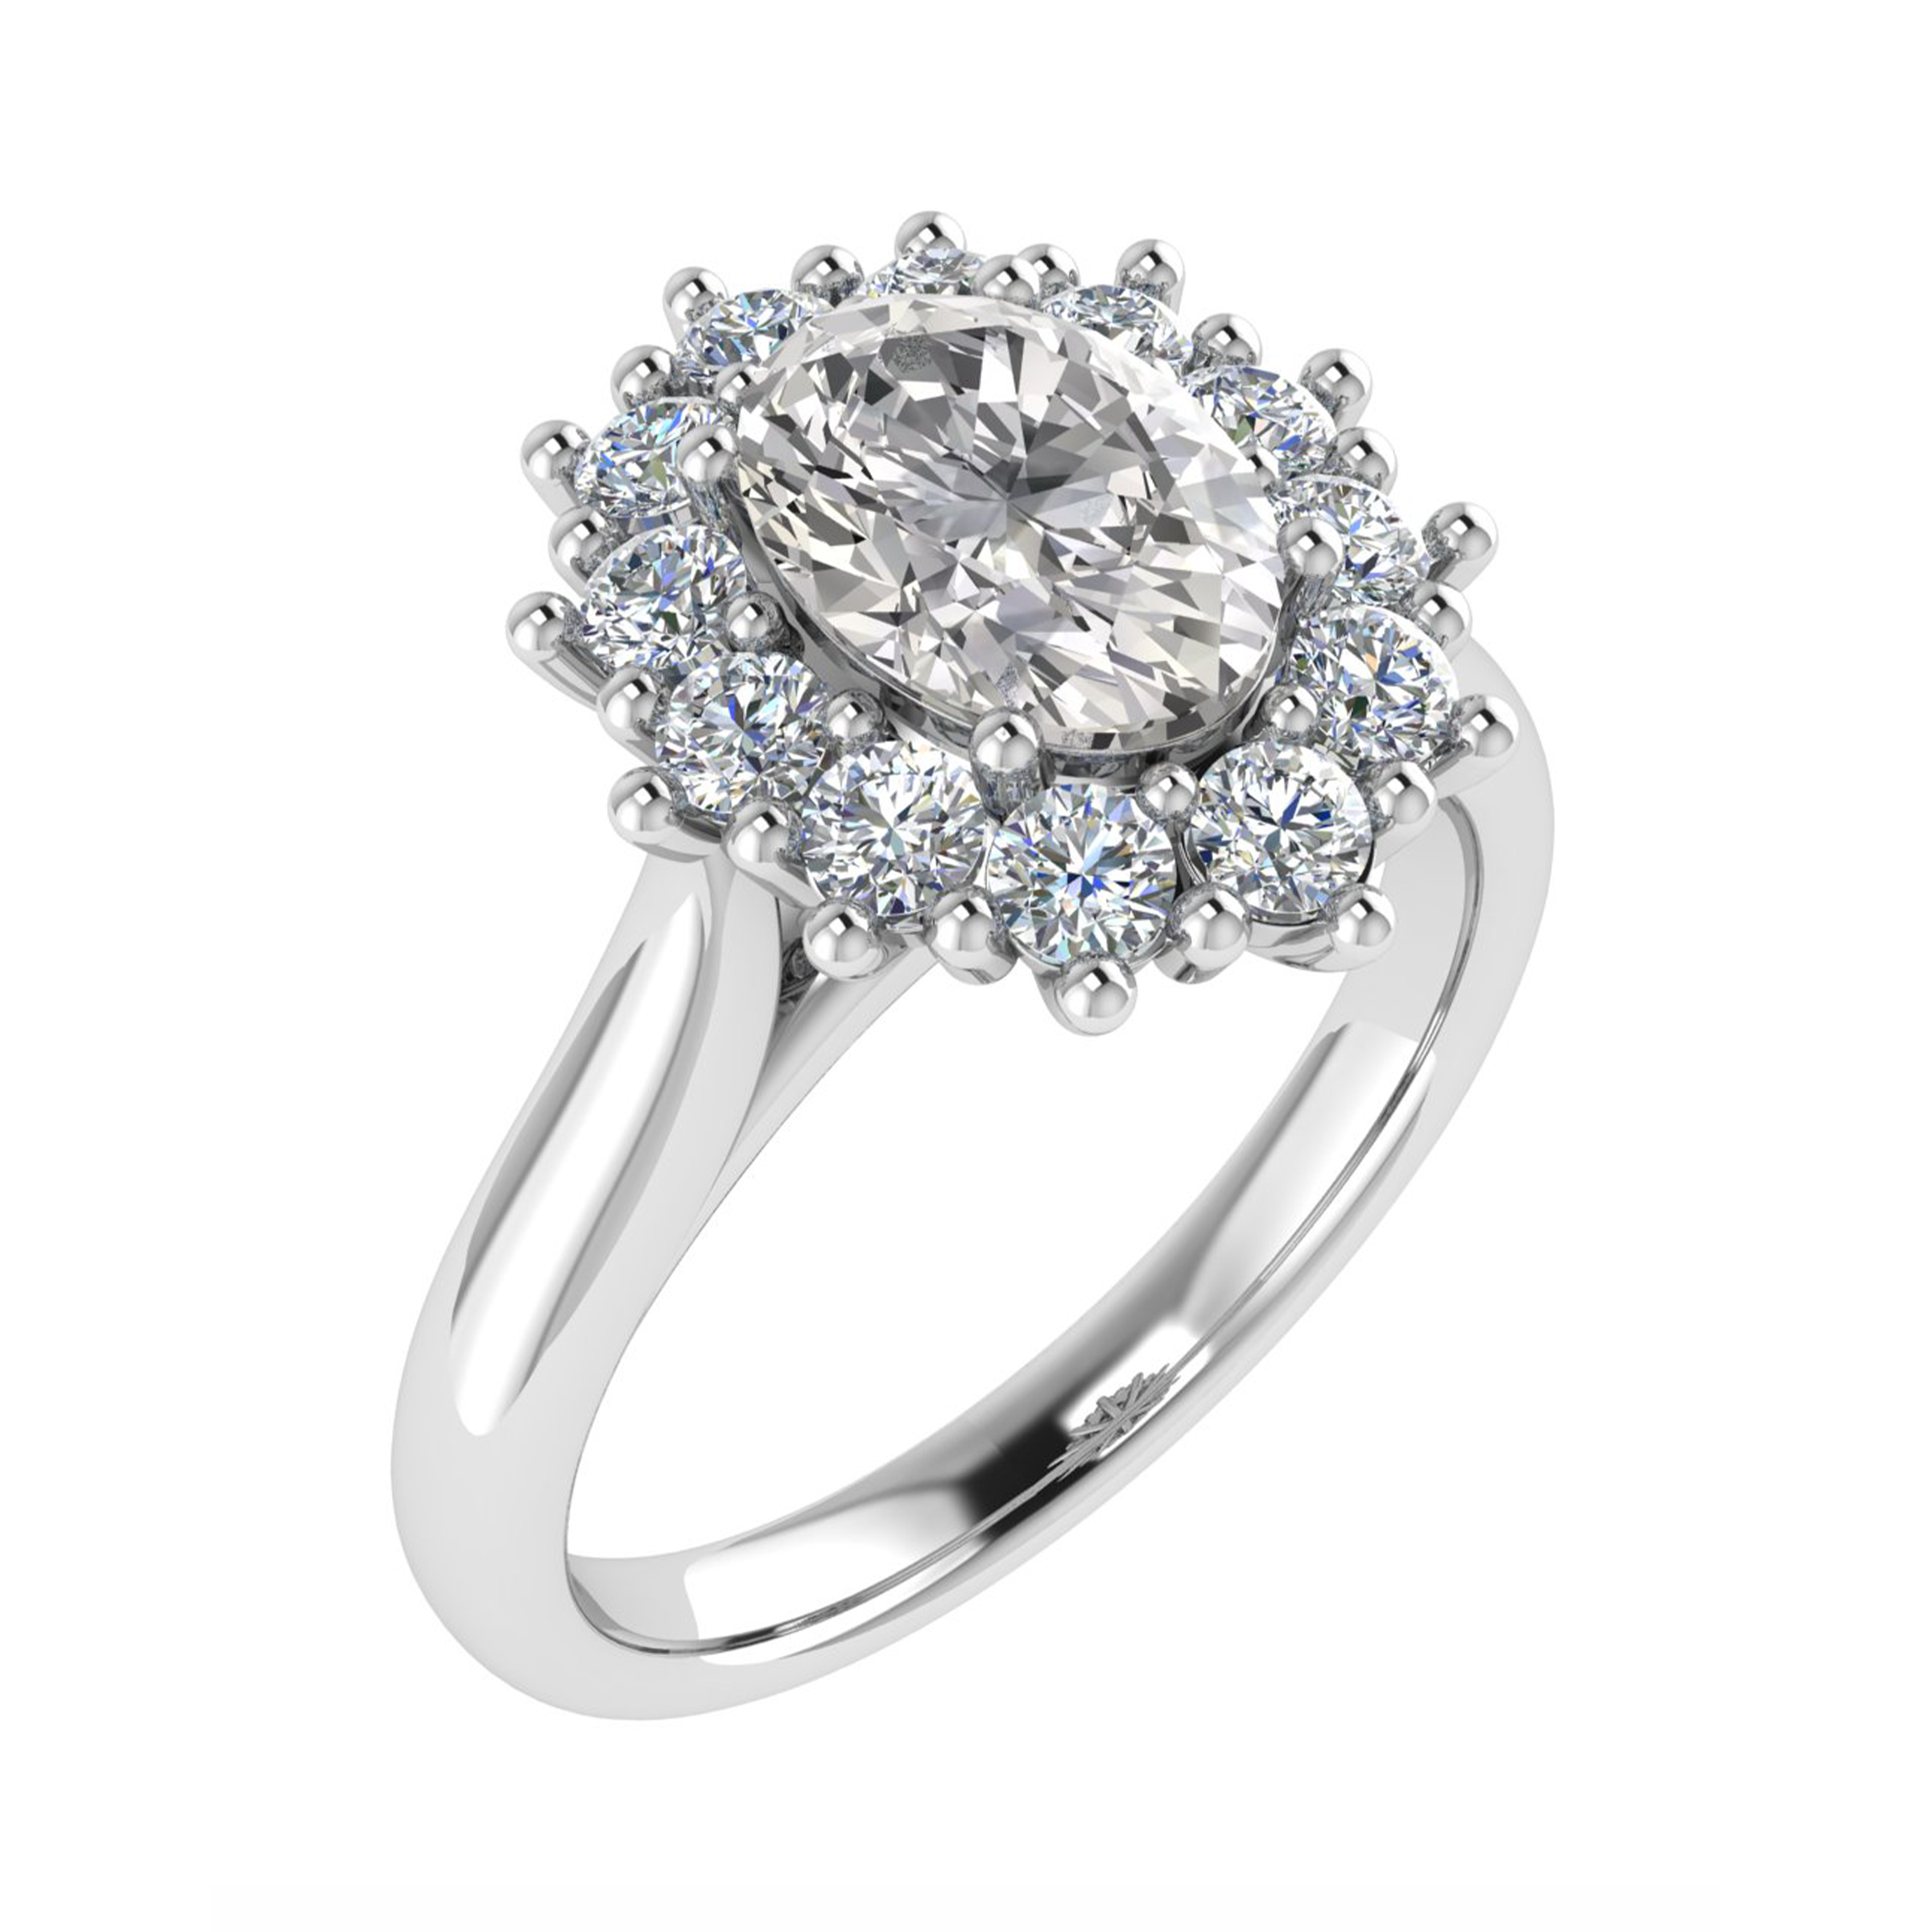 Cluster, Diamond Ring, Wedding Ring, Engagement Ring, Engagement Wedding Ring, Engagement Diamond Ring, Diamond Wedding Ring